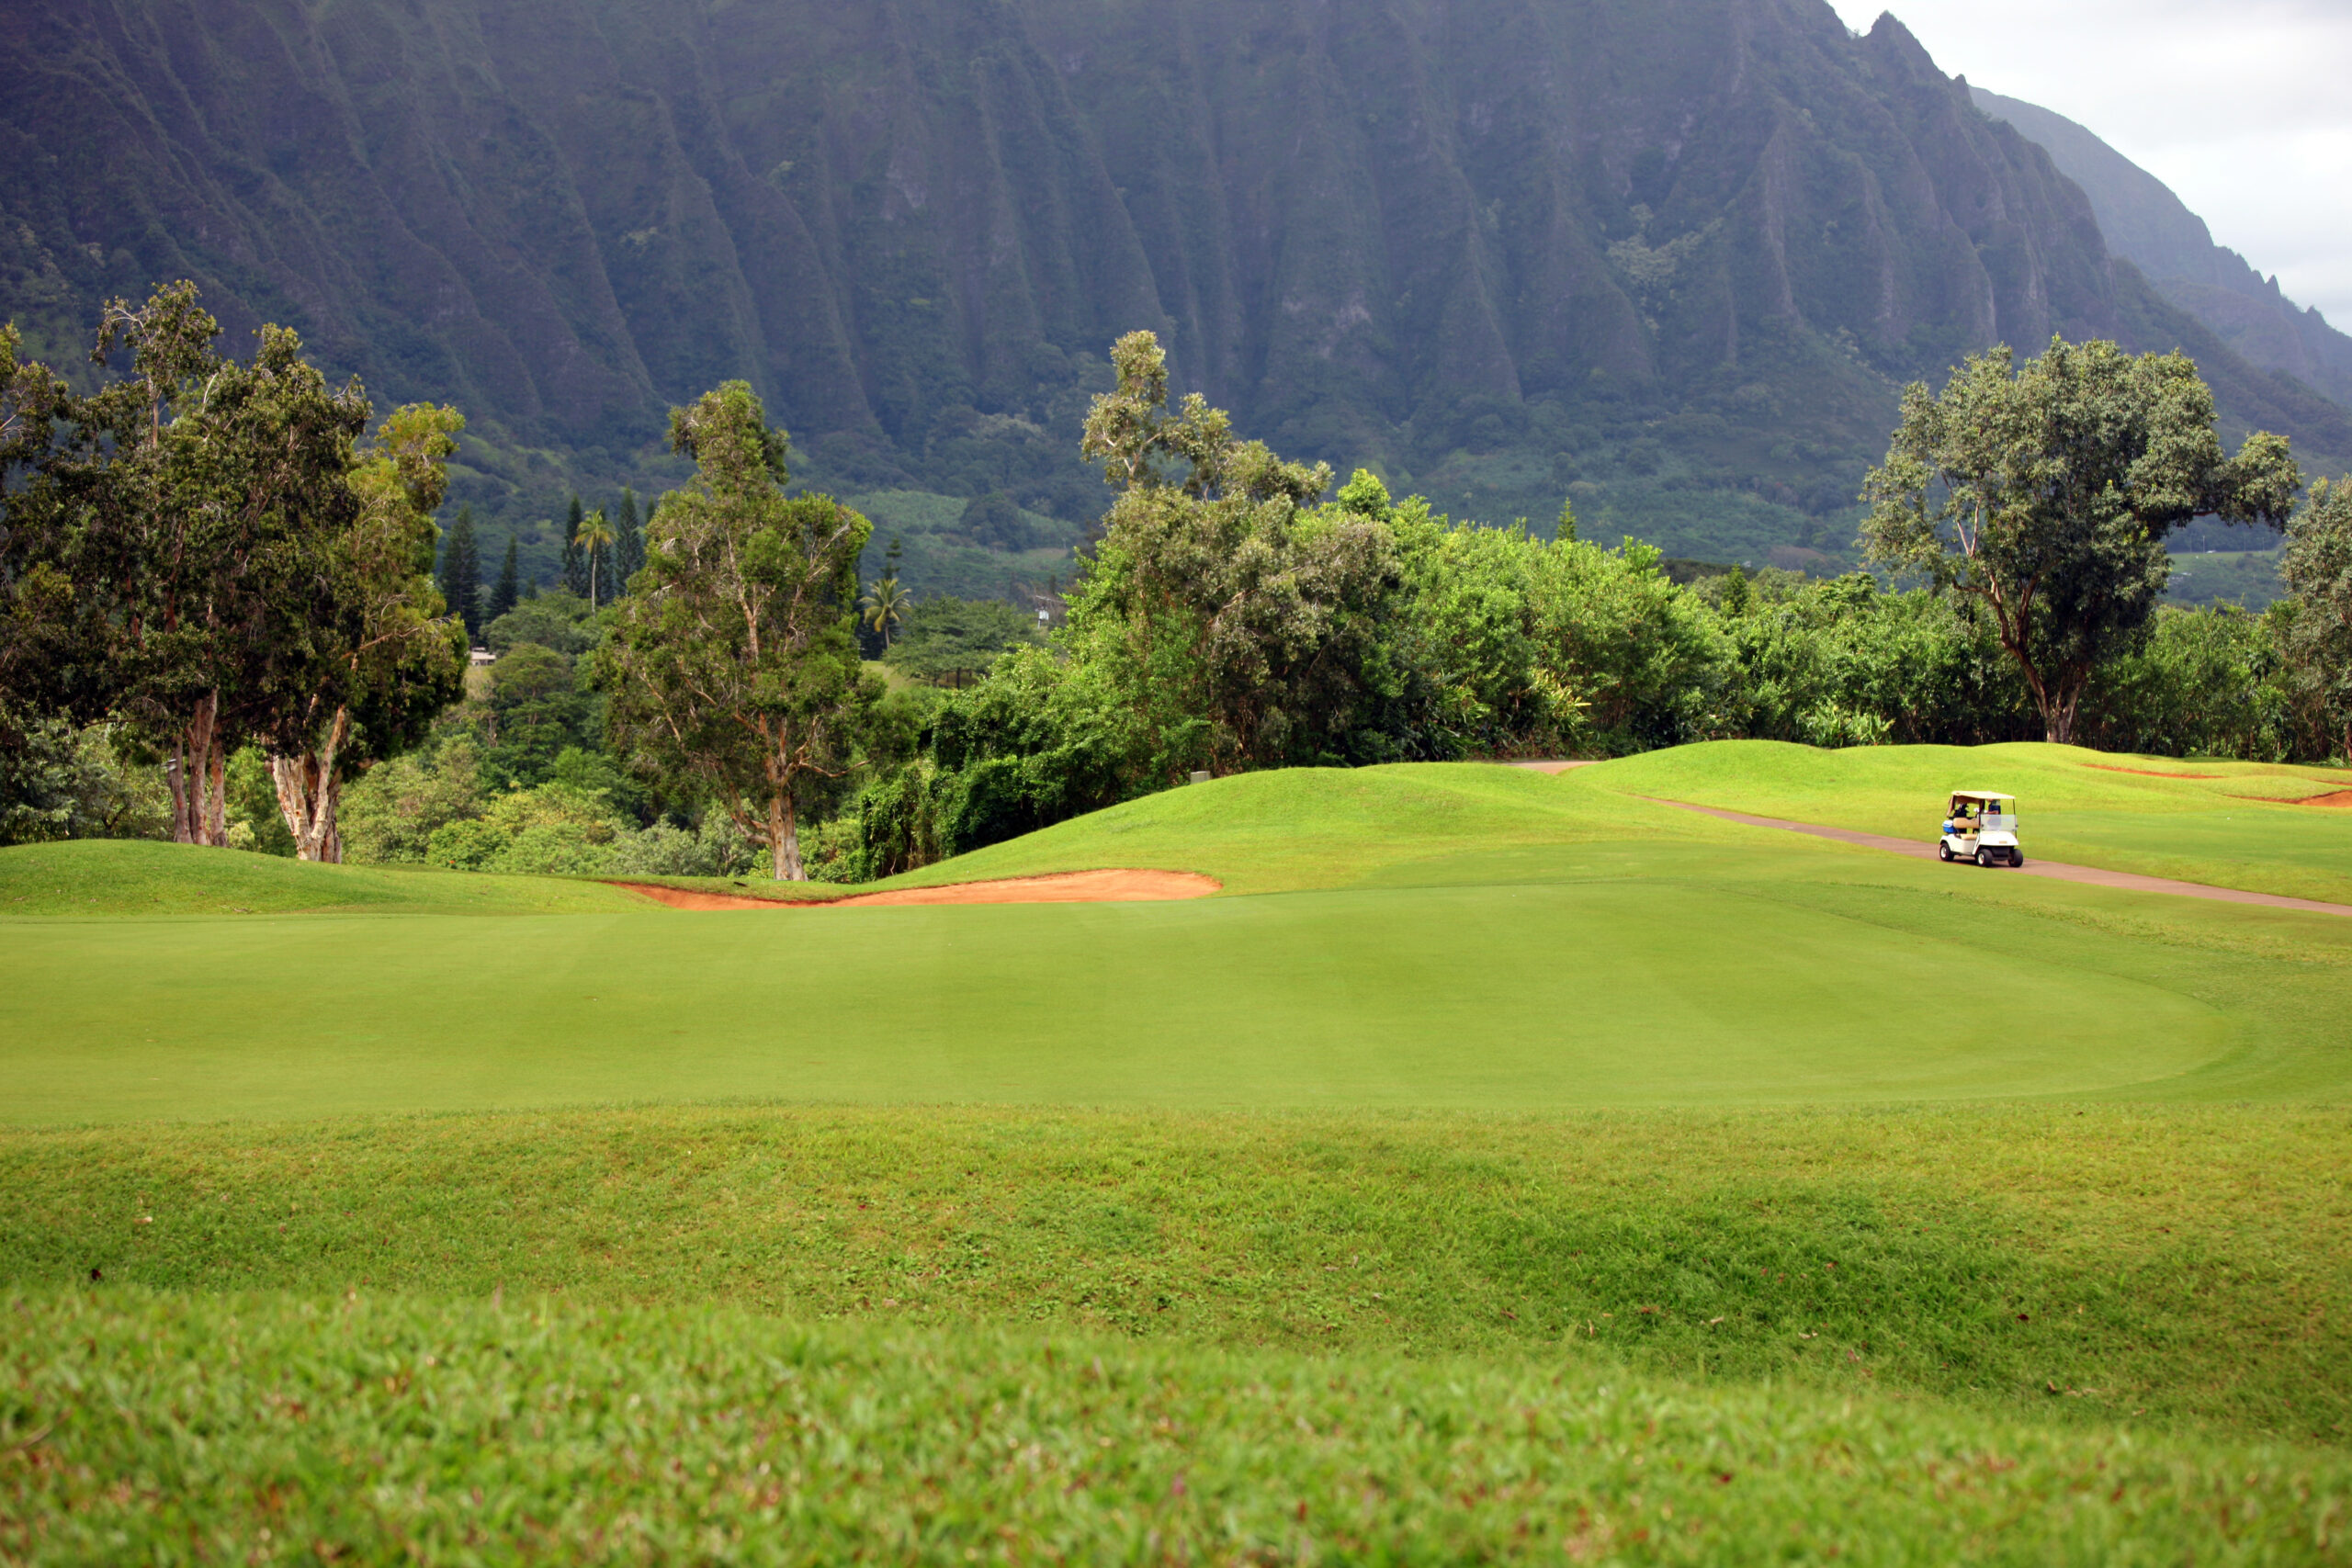 Golf cart on golf course at Ko'olau Golf Club on Oahu Hawaii